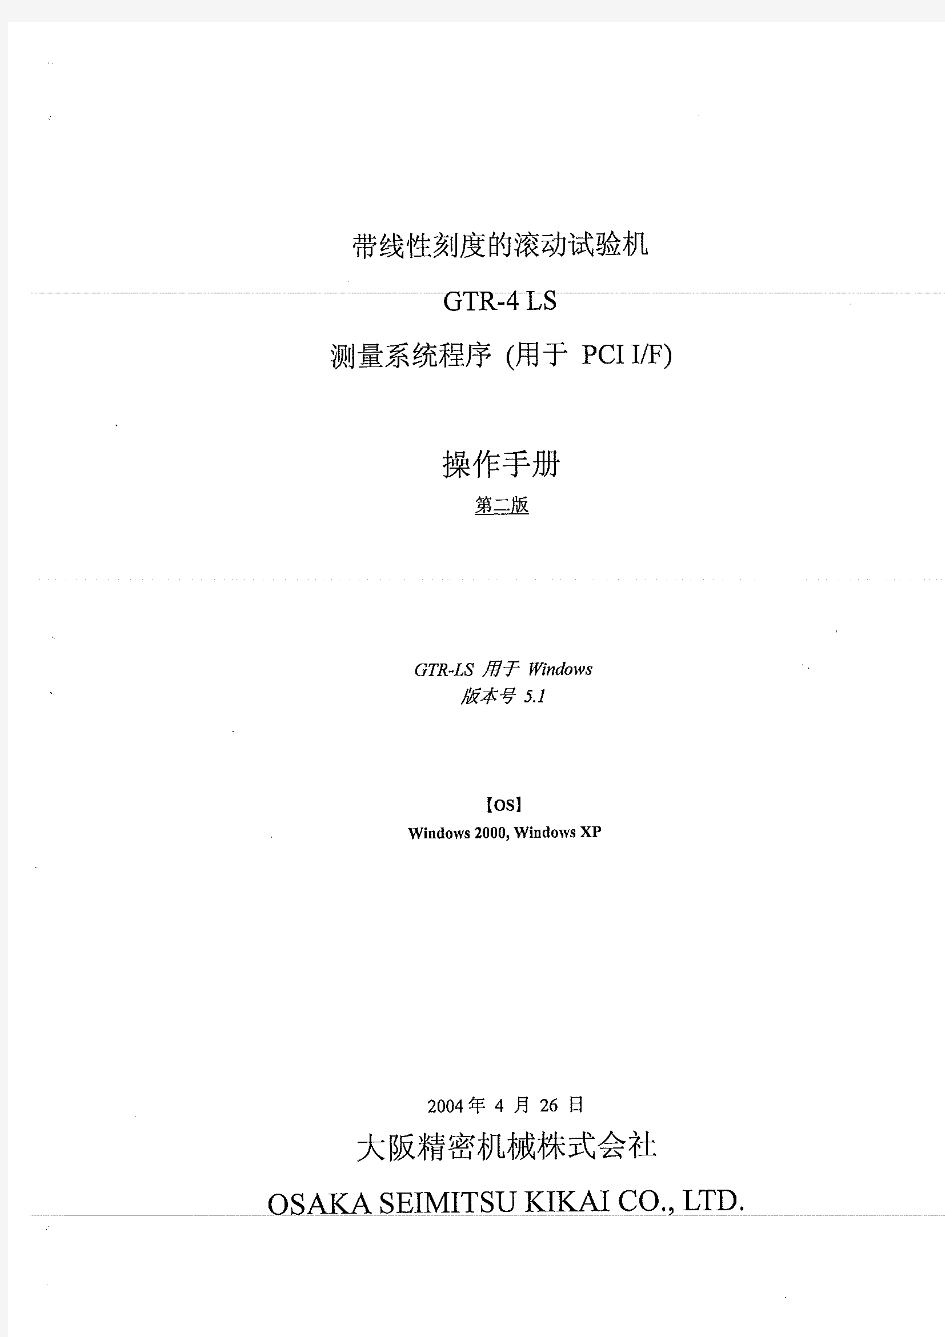 Operating Manual GTR-4LS (Chinese)